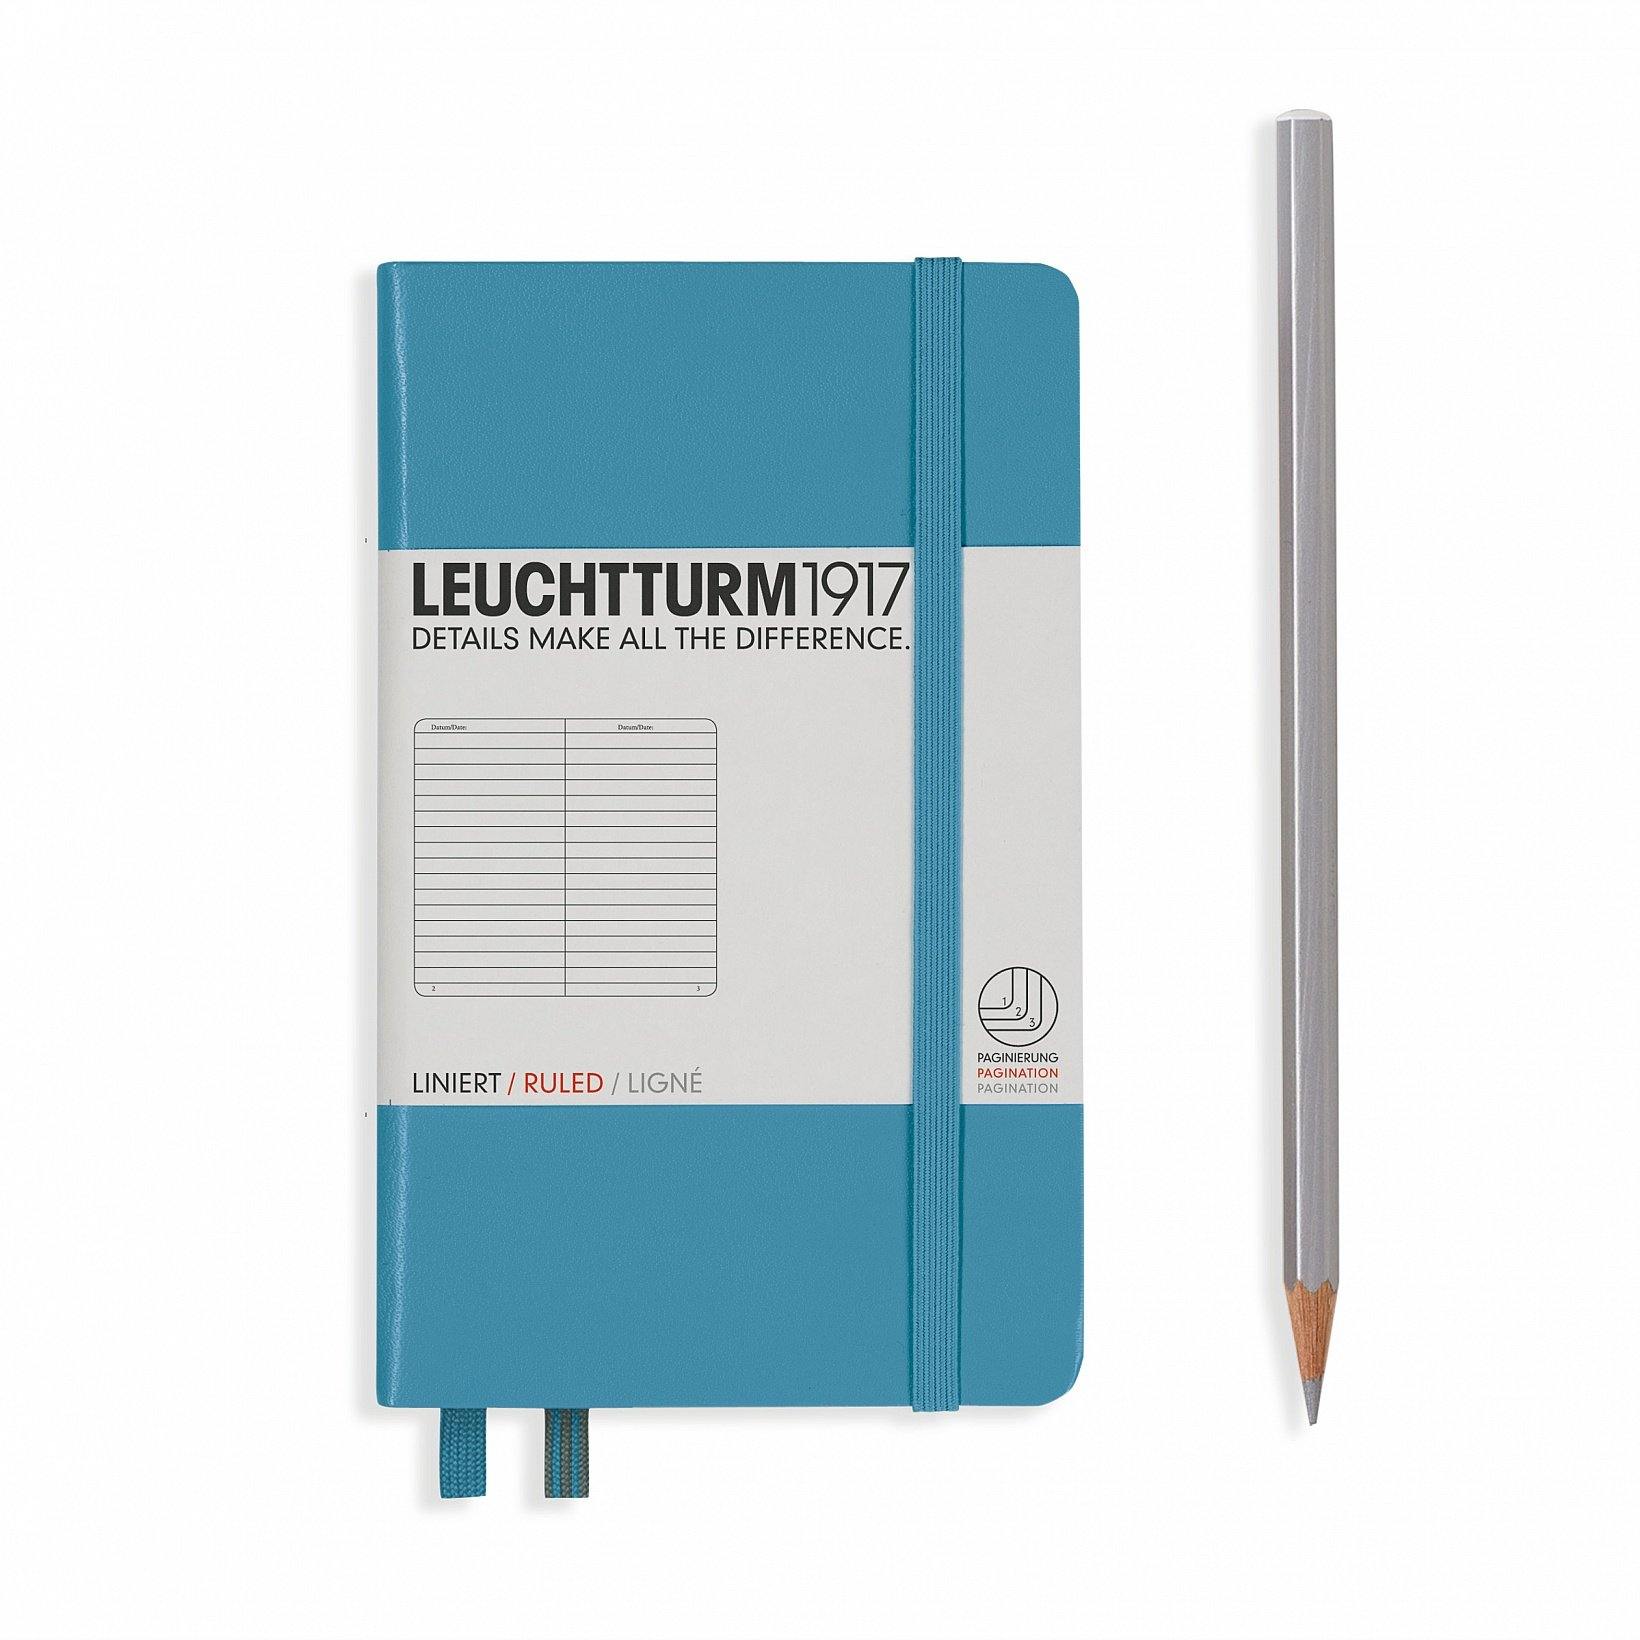 Leuchtturm1917 Pocket Ruled Hardcover Notebook - Laywine's